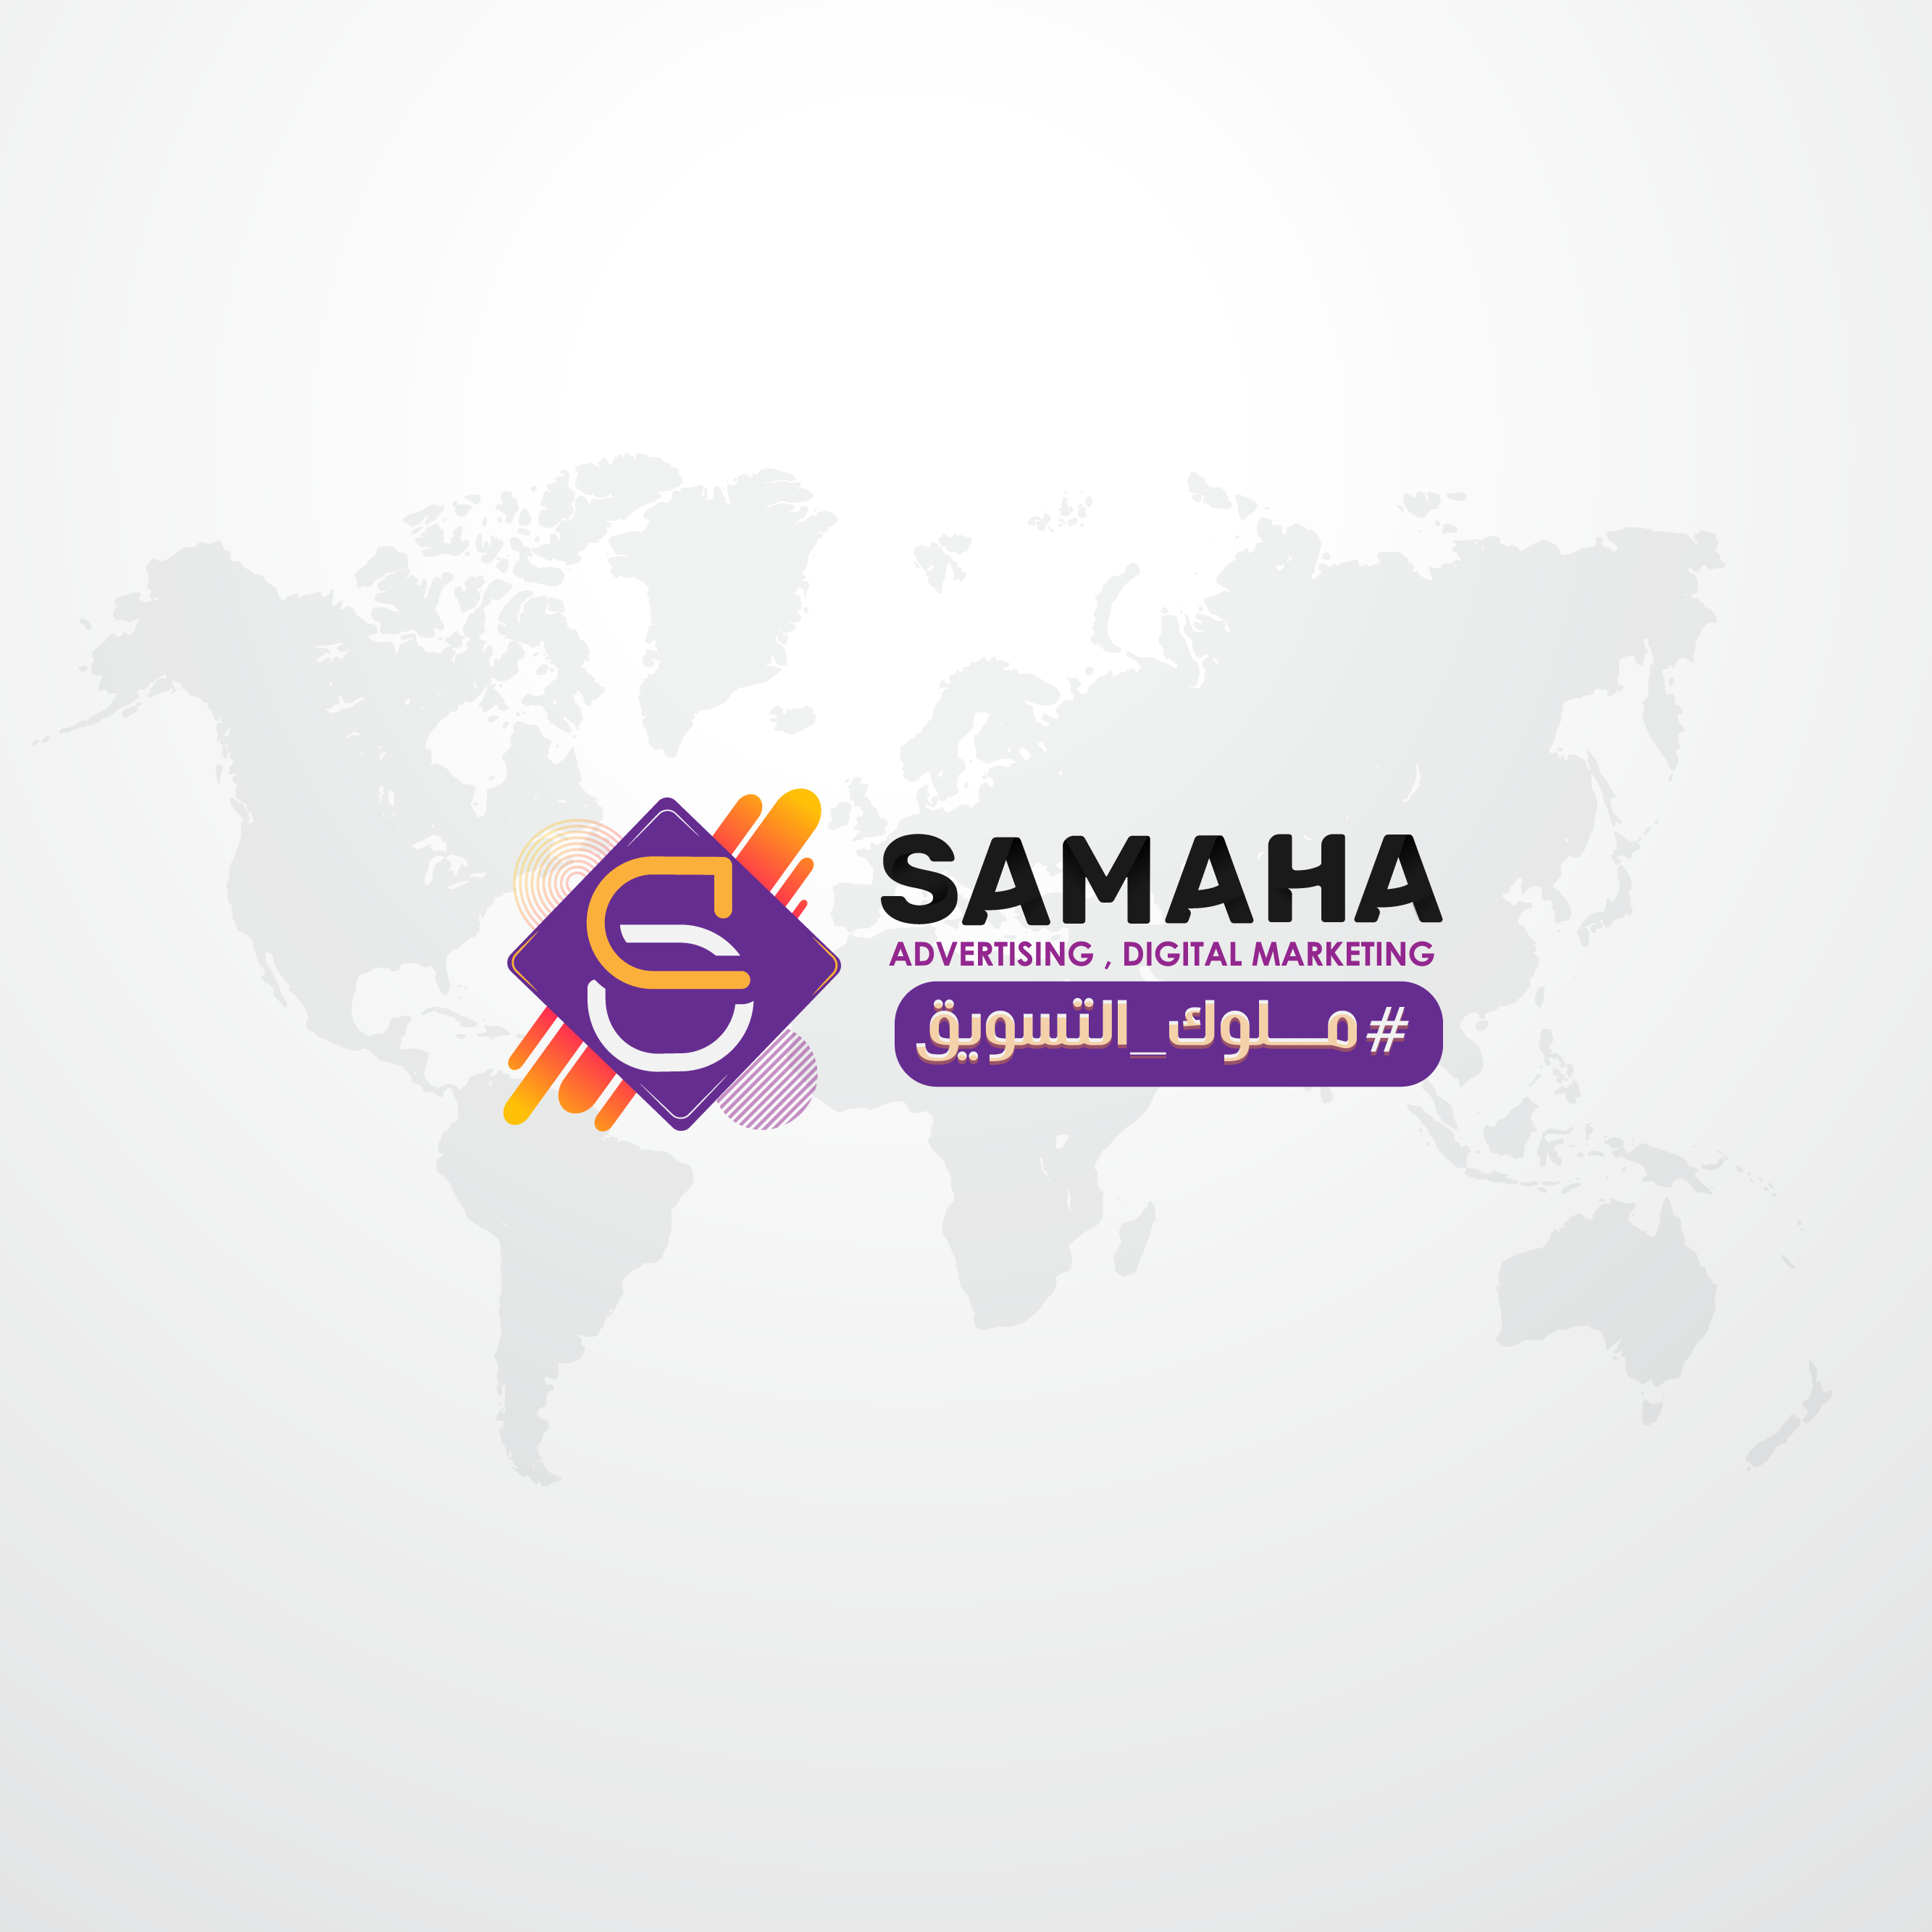 Samaha Busniess Marketing